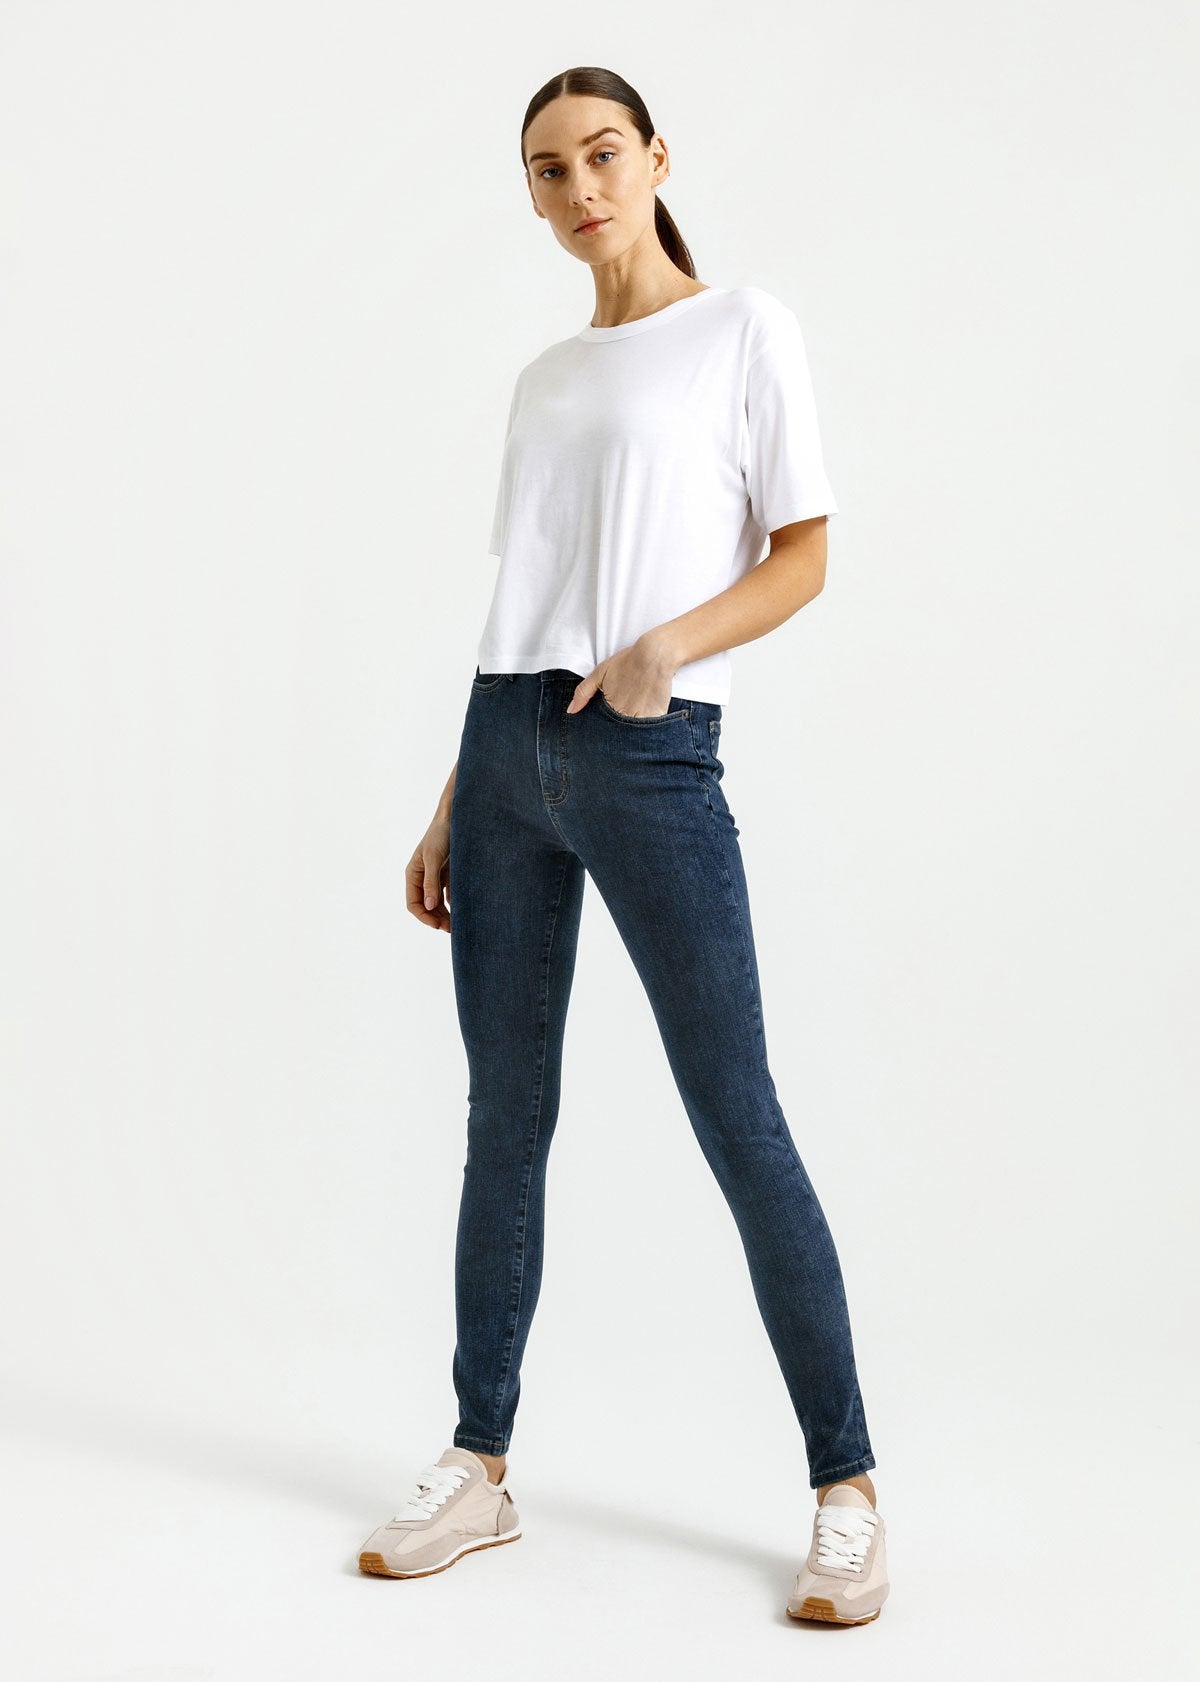 D. Jeans Womens Capris Denim Stretch Light Pink Size 14